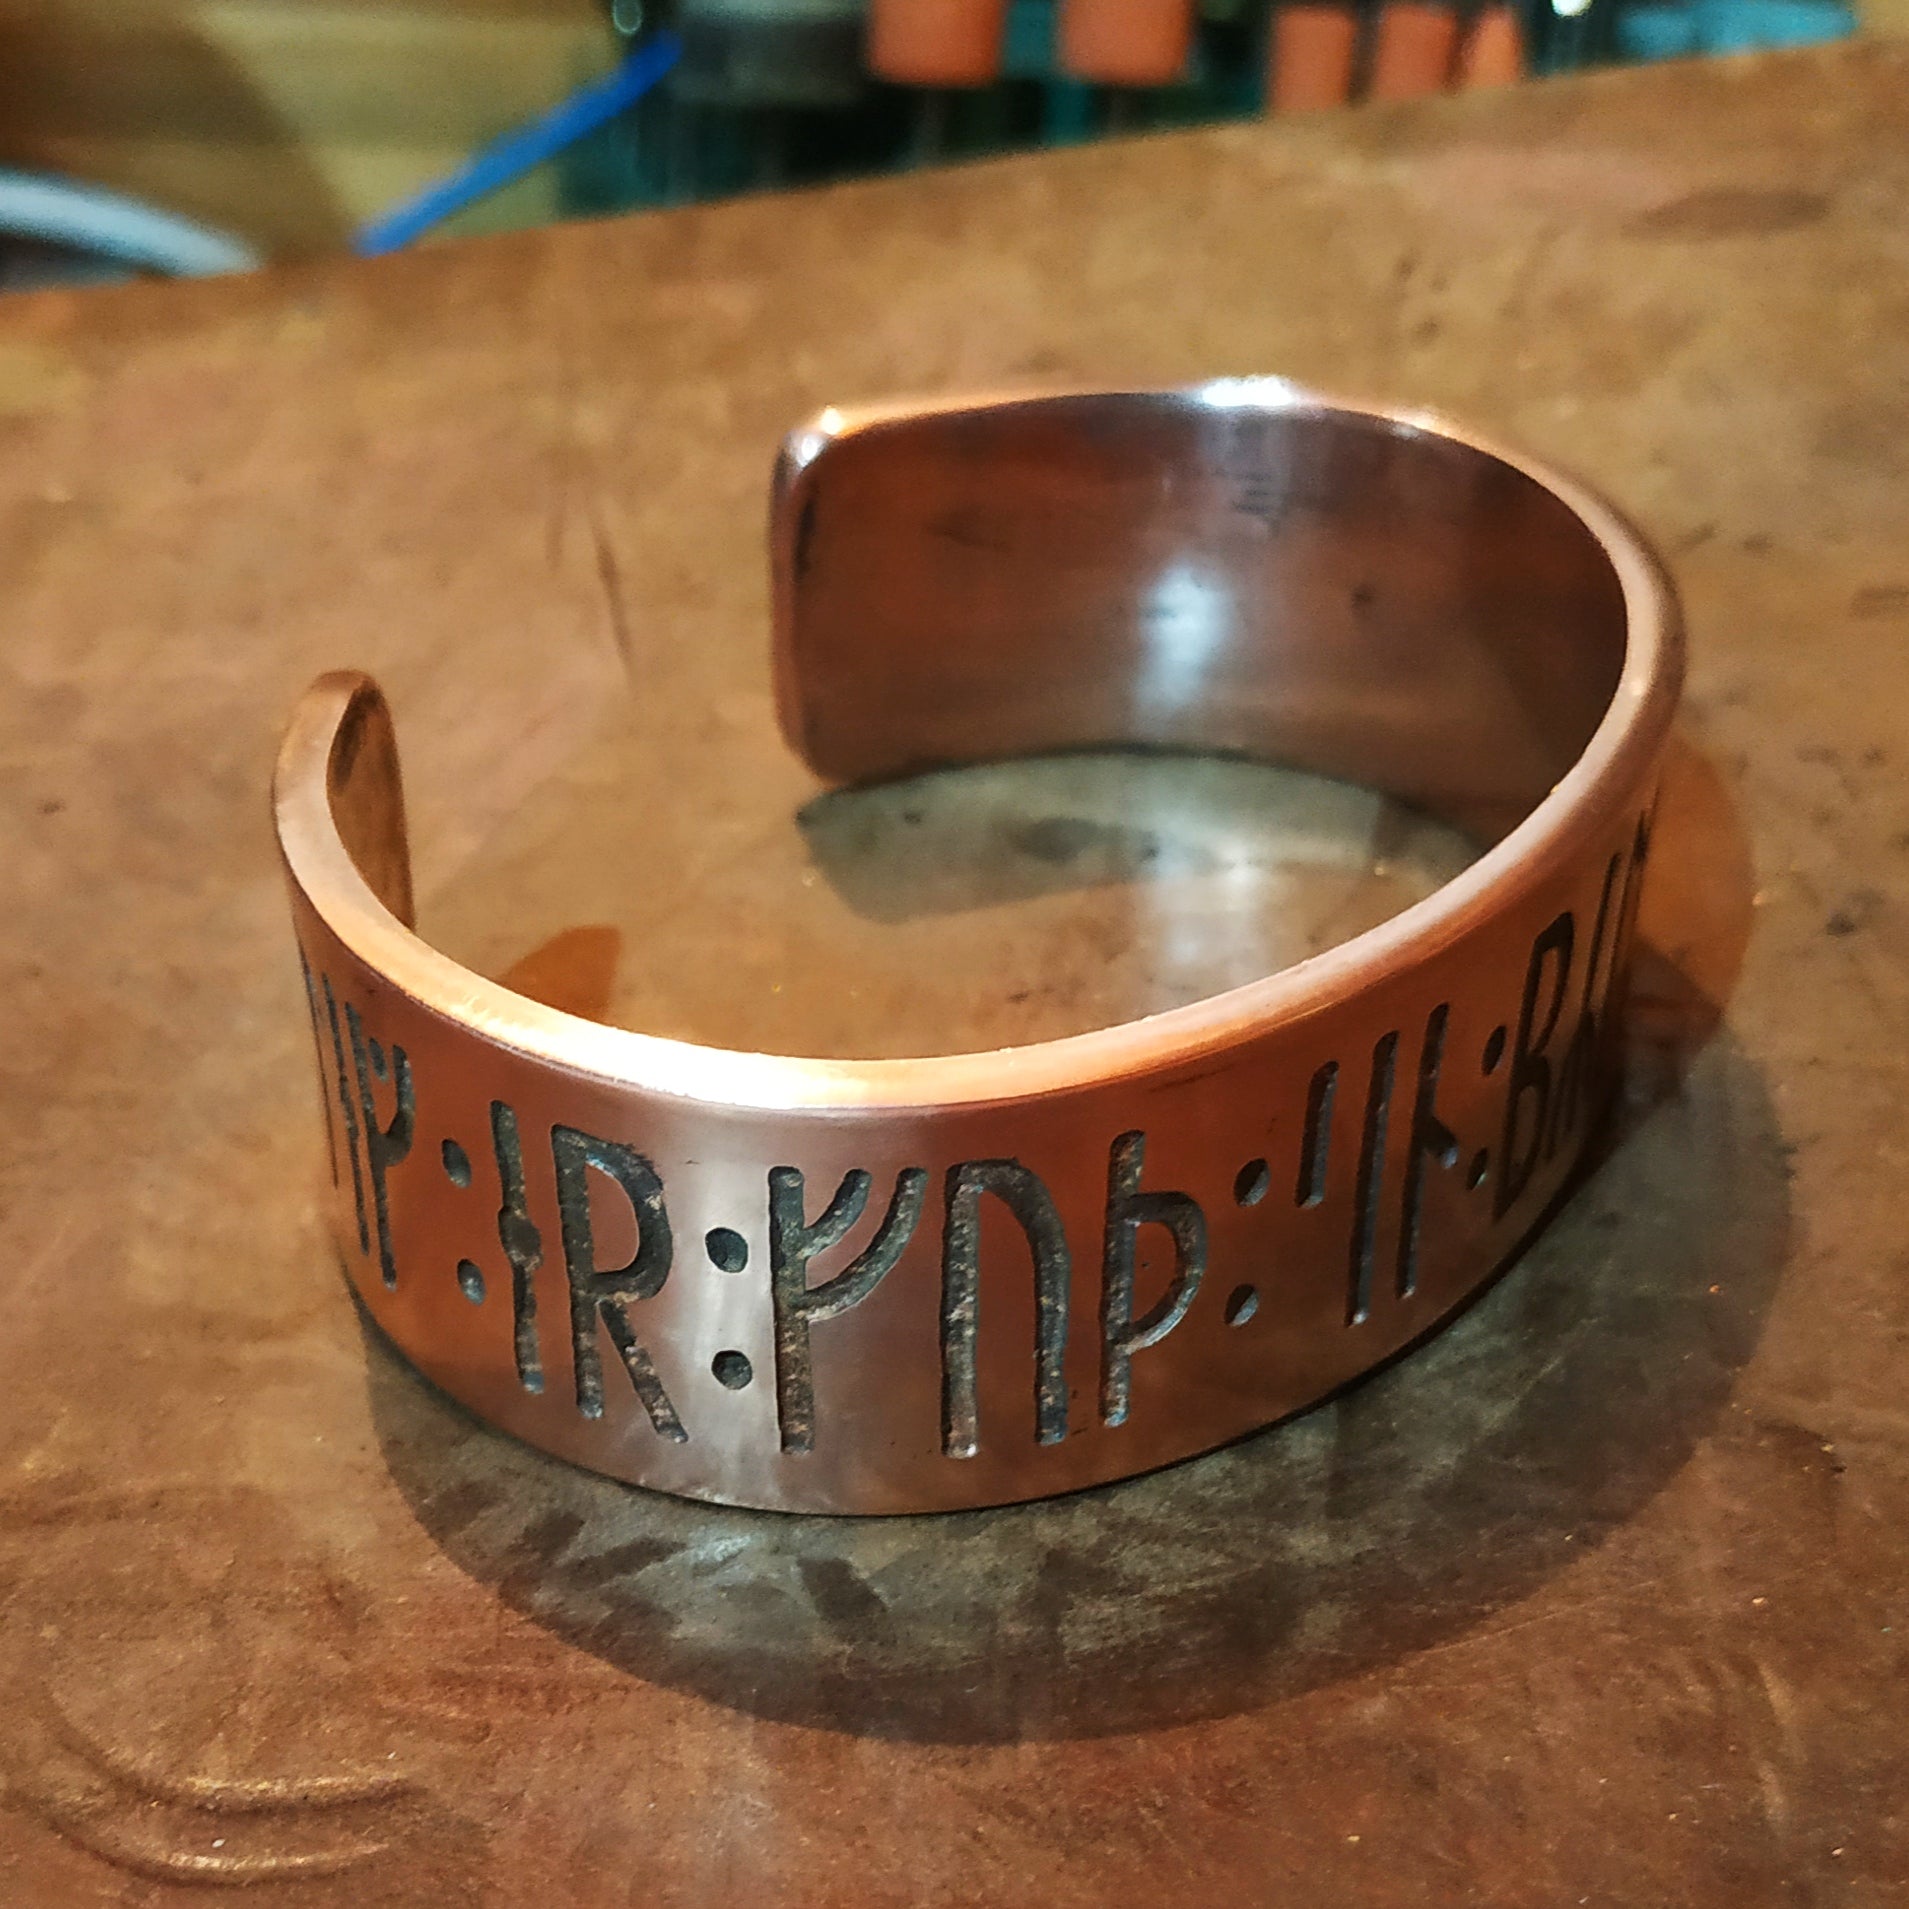 Naughty Viking Cuff Bracelet Armband